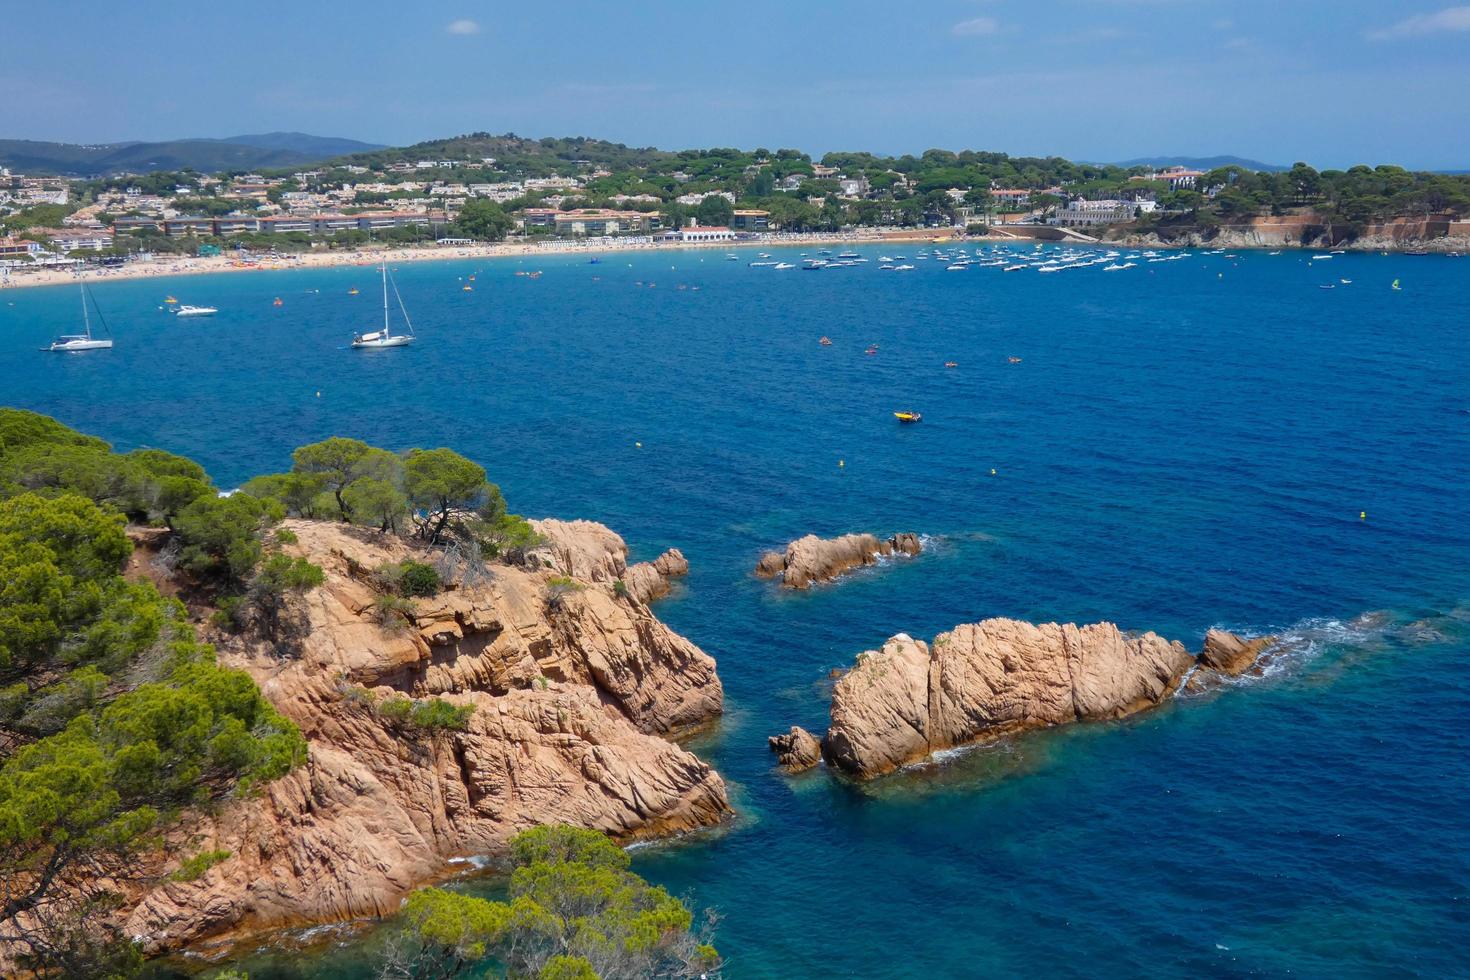 côte accidentée, côte méditerranéenne de la costa brava catalane, sant feliu de guixols photo